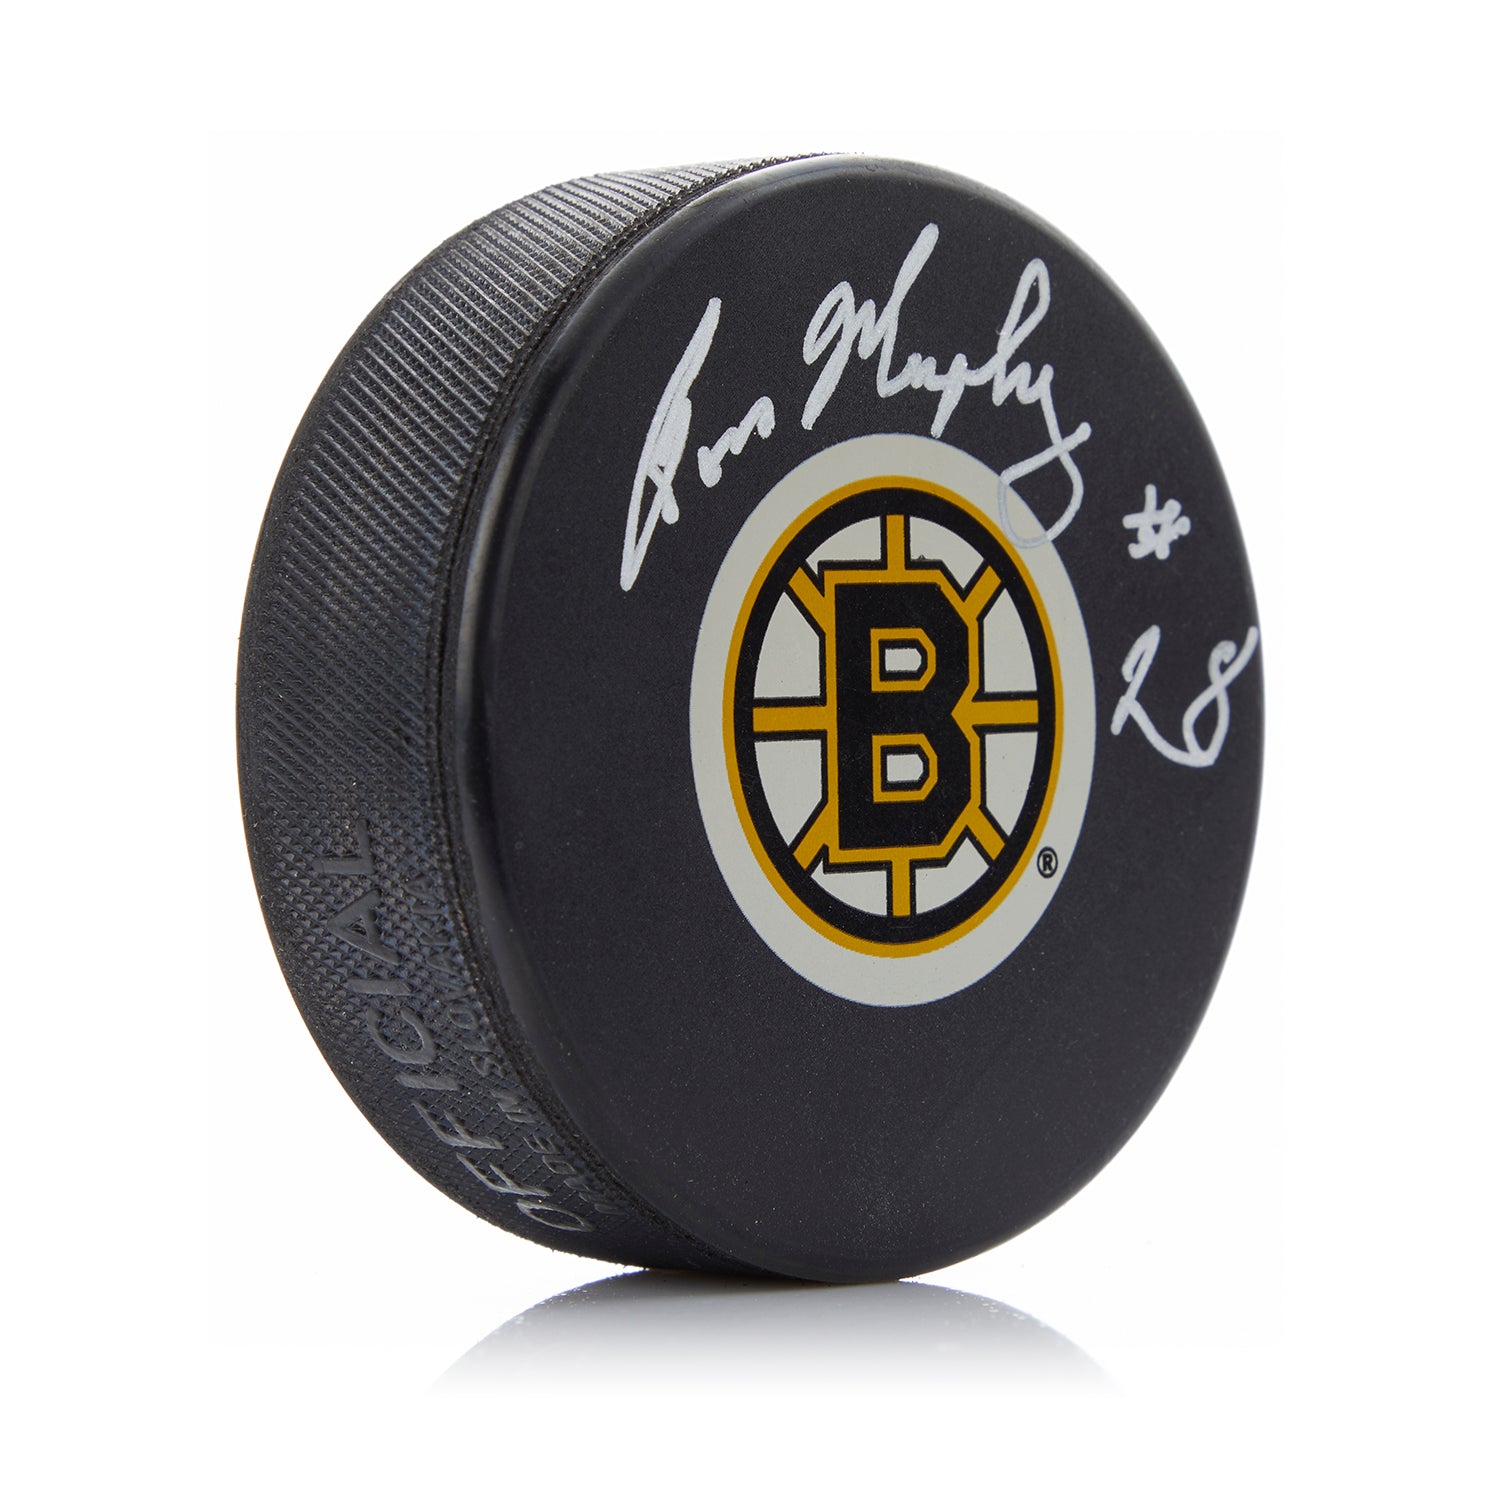 Ron Murphy Autographed Boston Bruins Hockey Puck